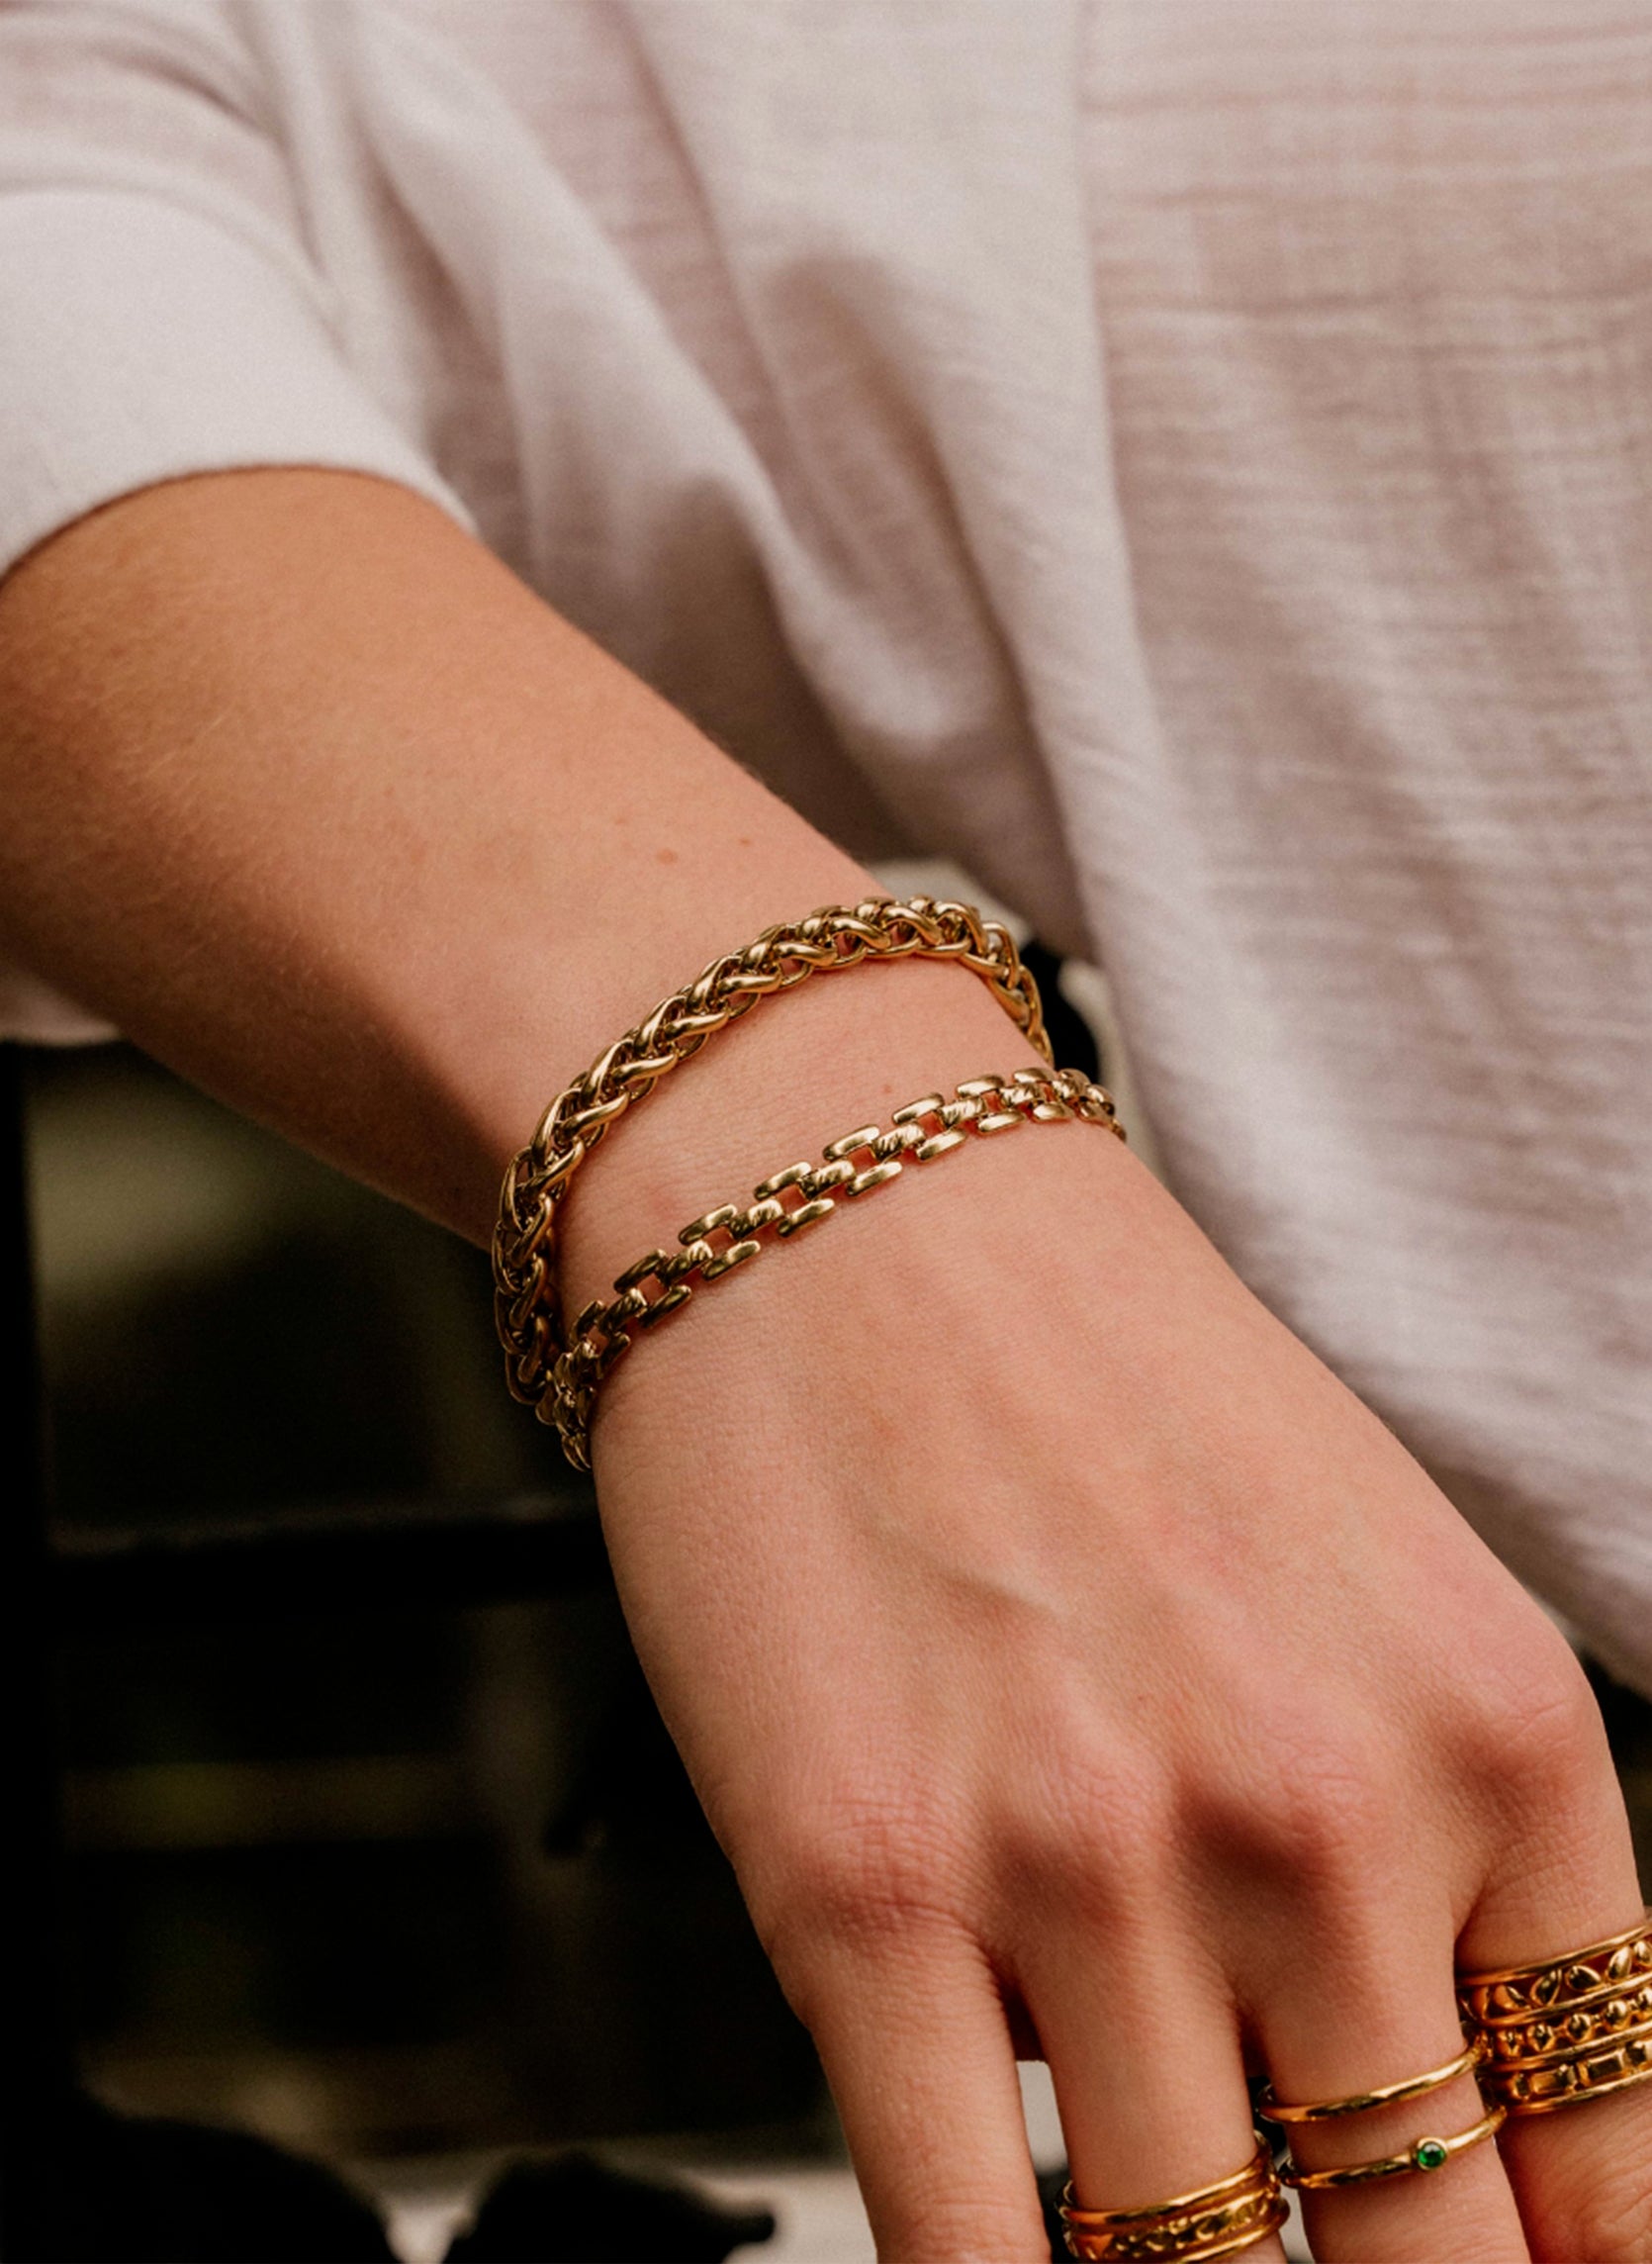 Chain bracelet Romane